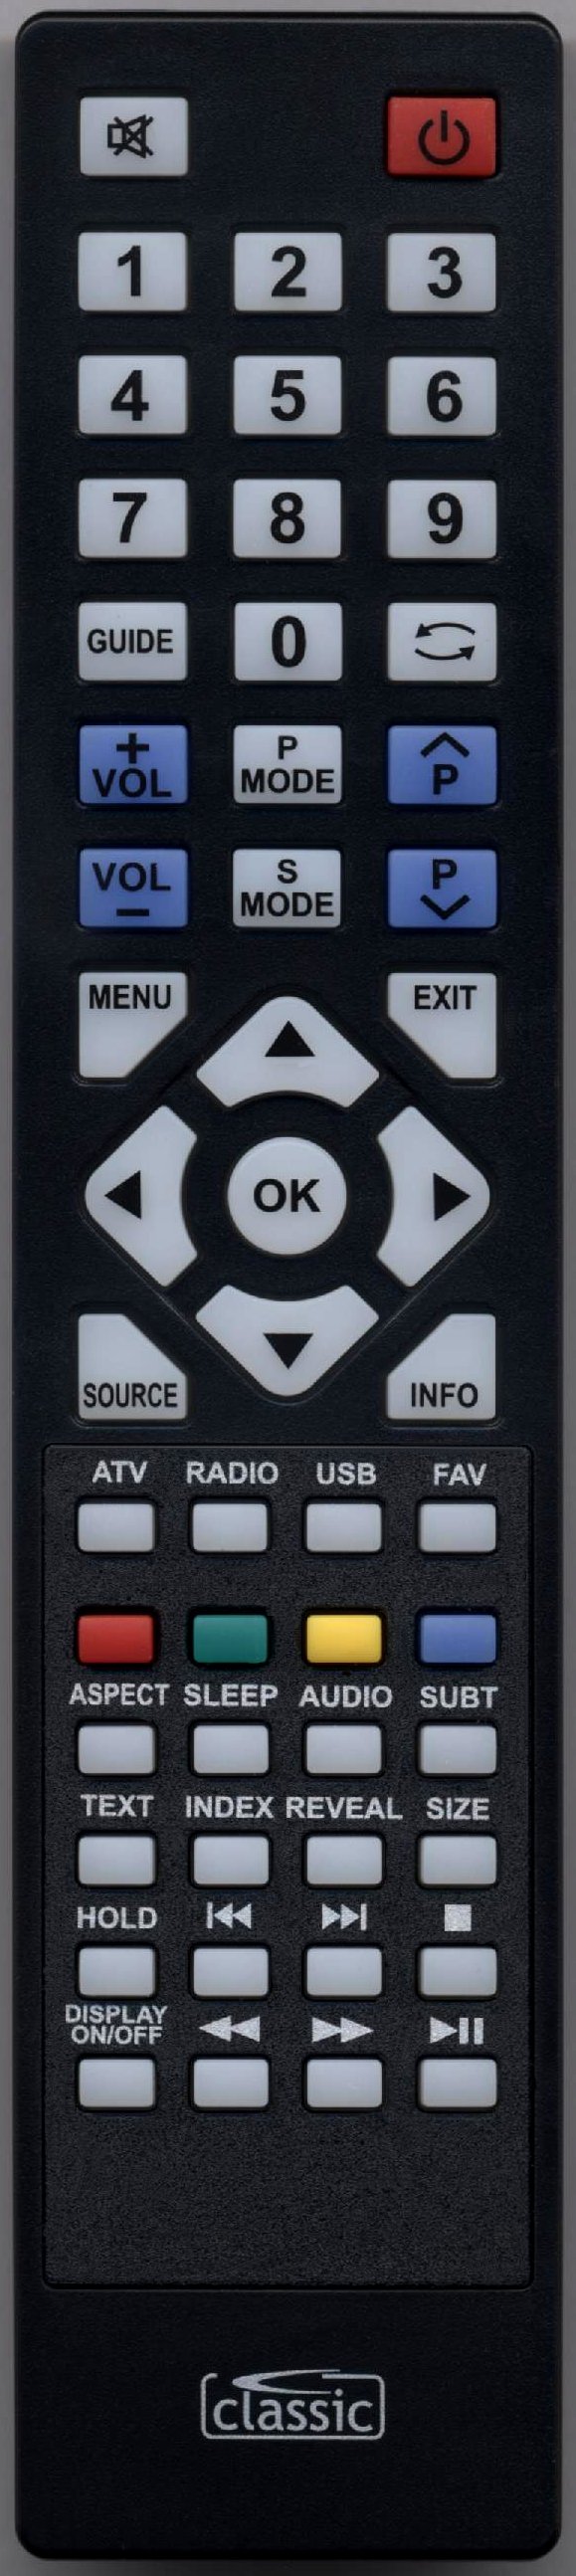 UMC 40/58G Remote Control